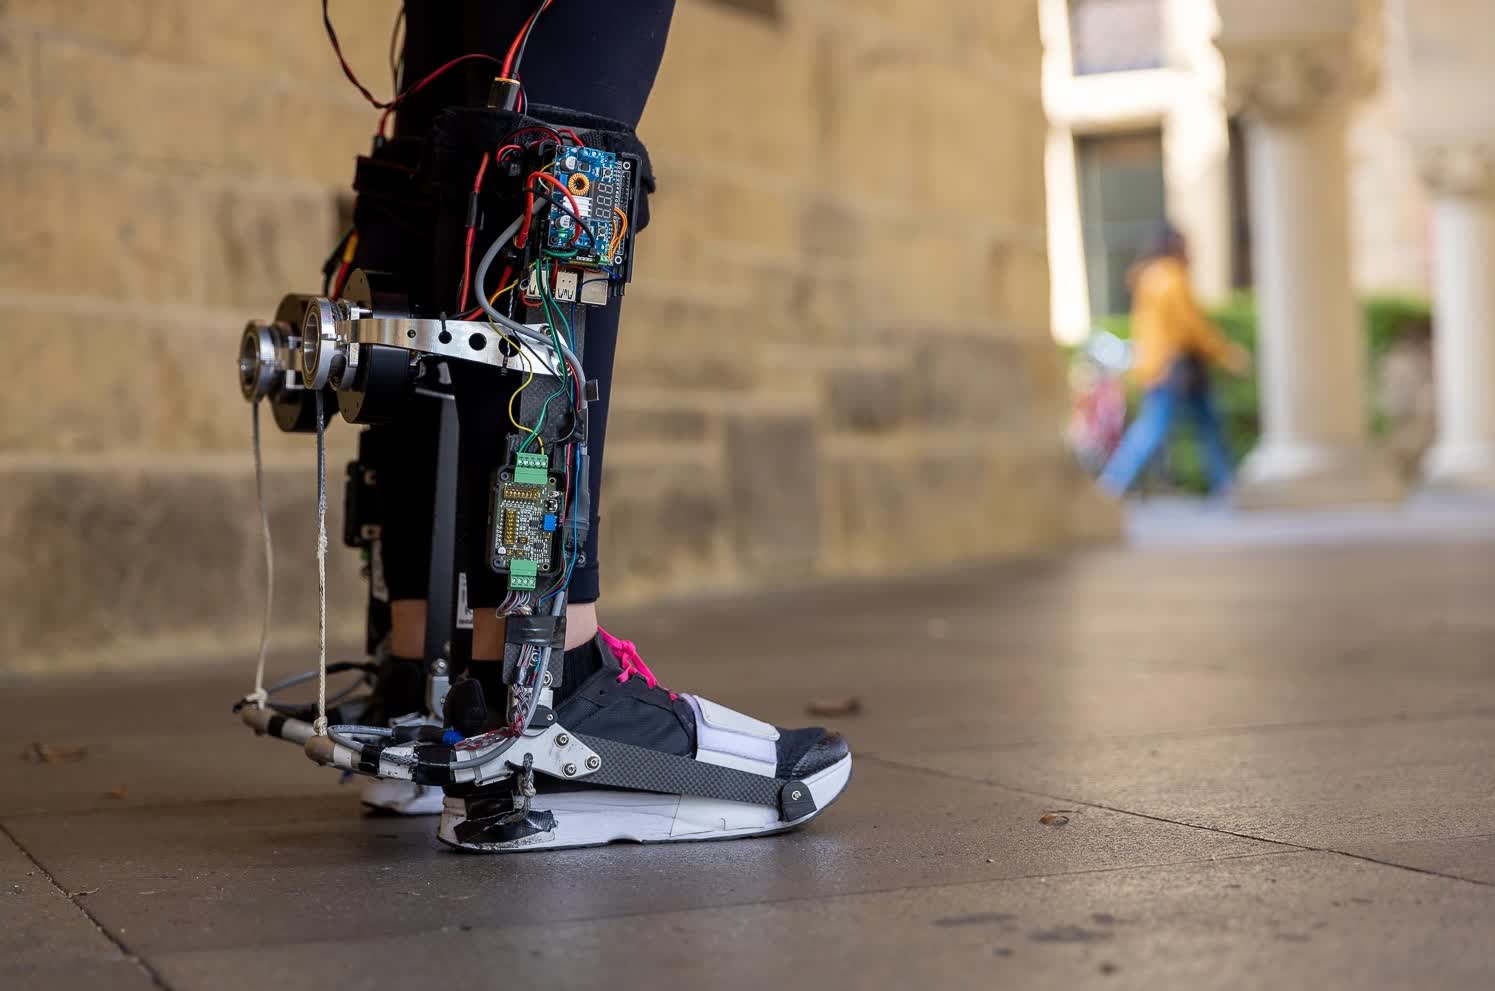 Raspberry Pi-powered exoskeleton makes walking faster and easier